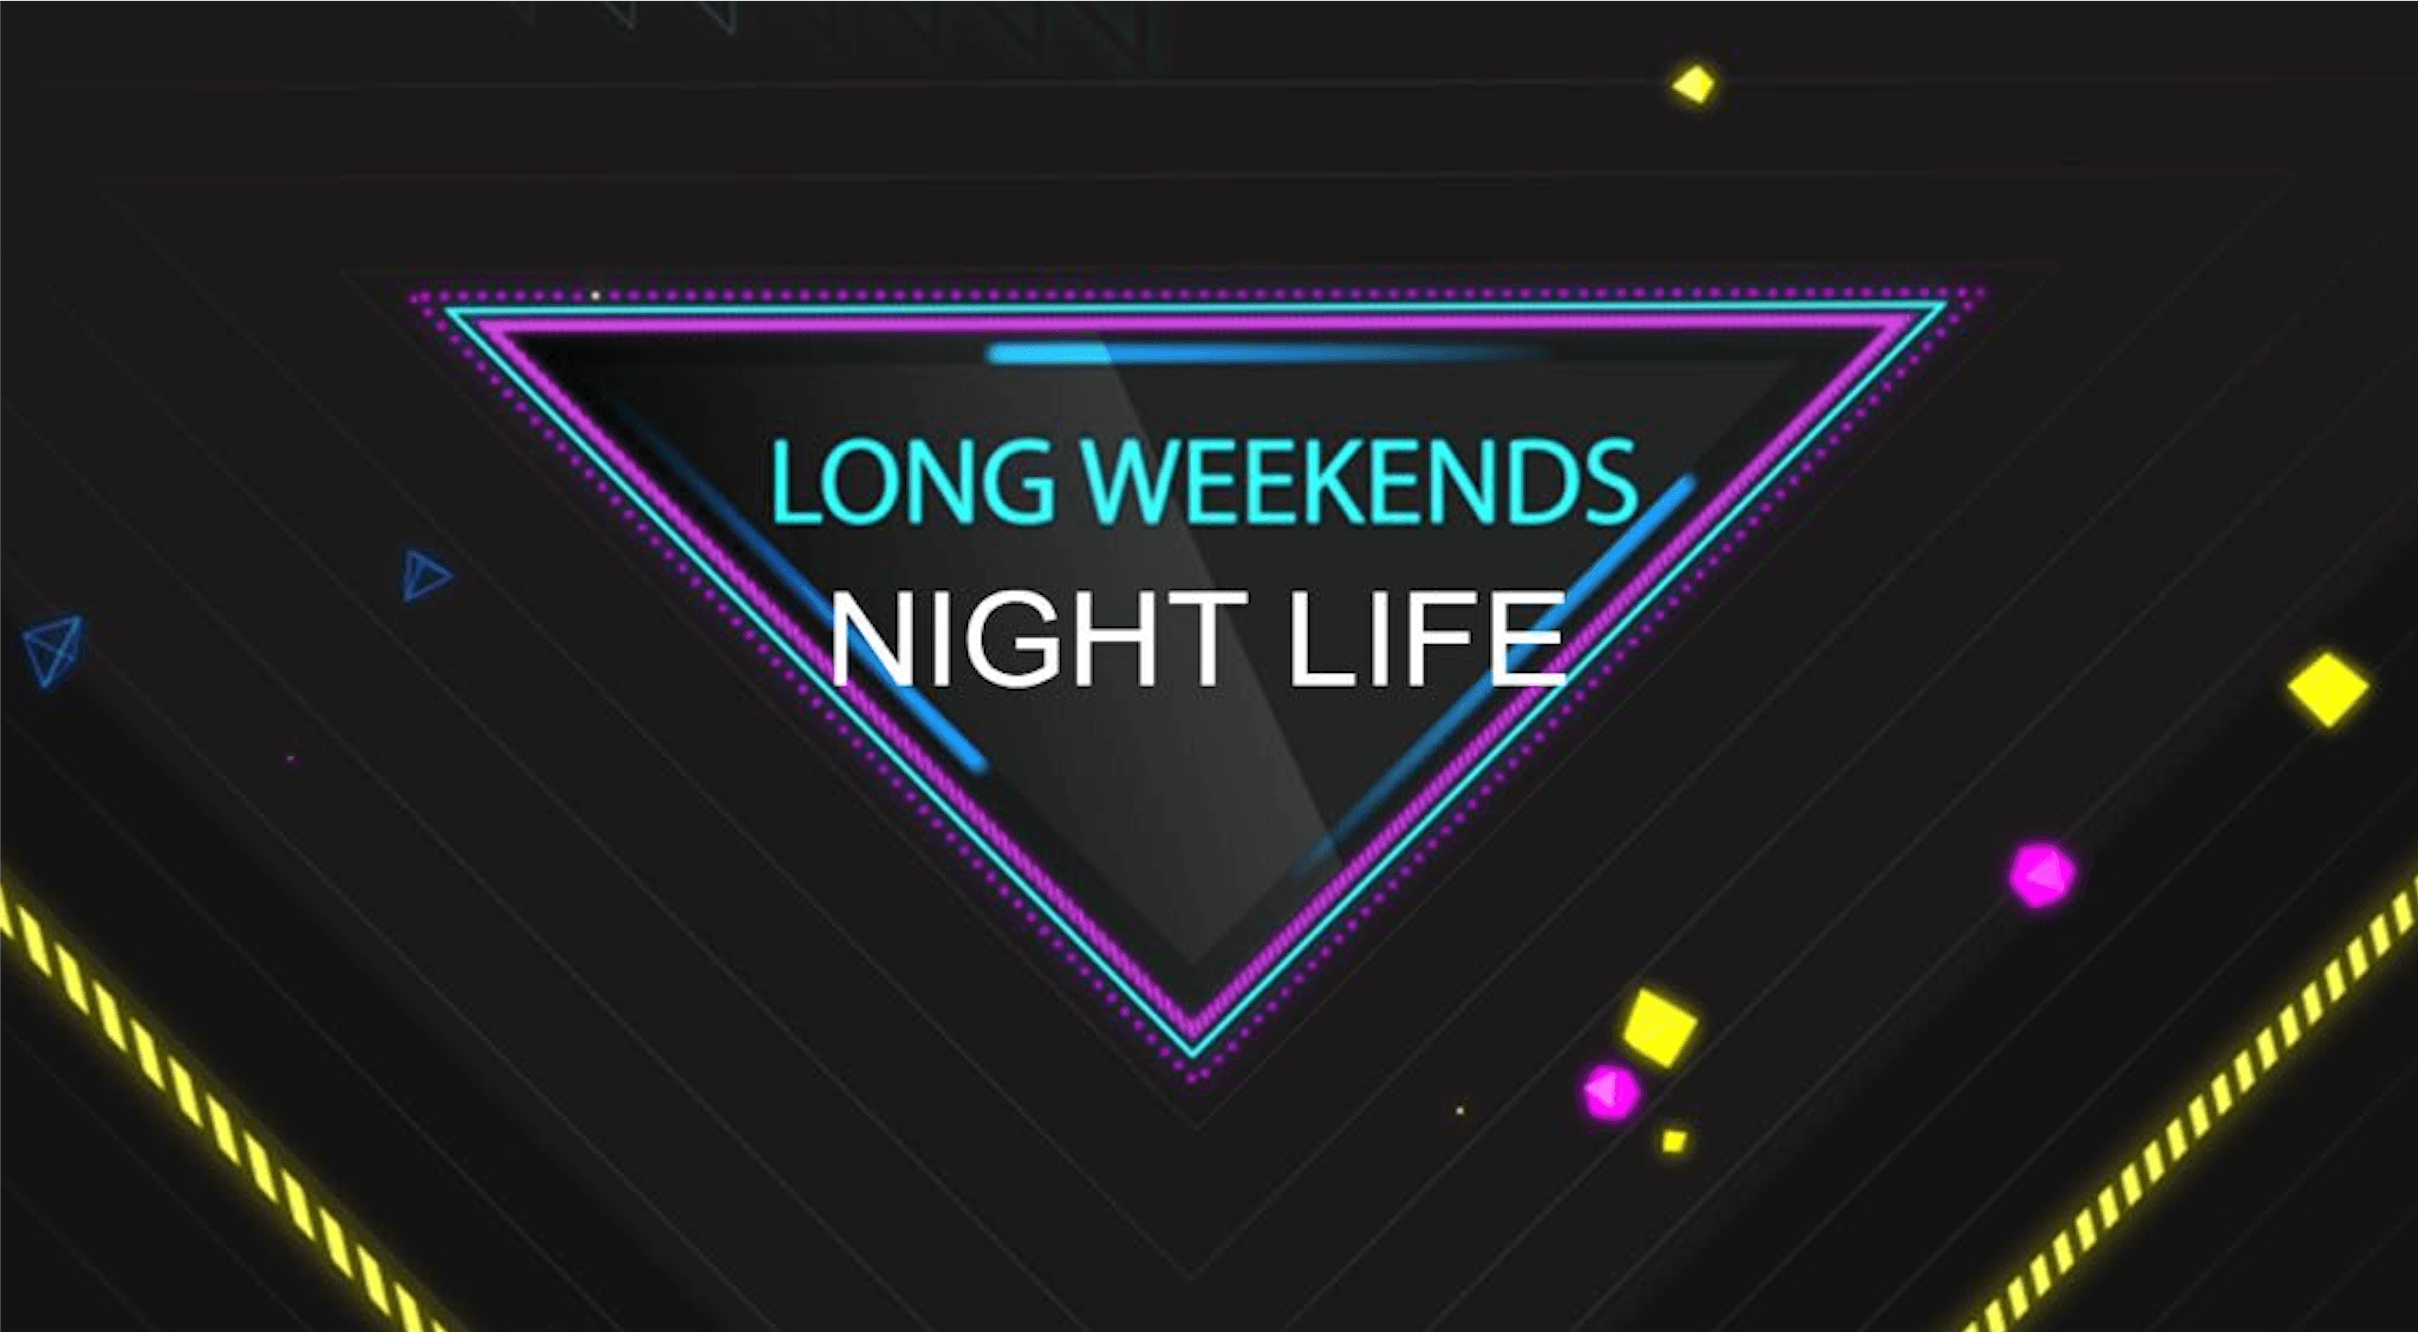 We love long weekends! Night life is epic!